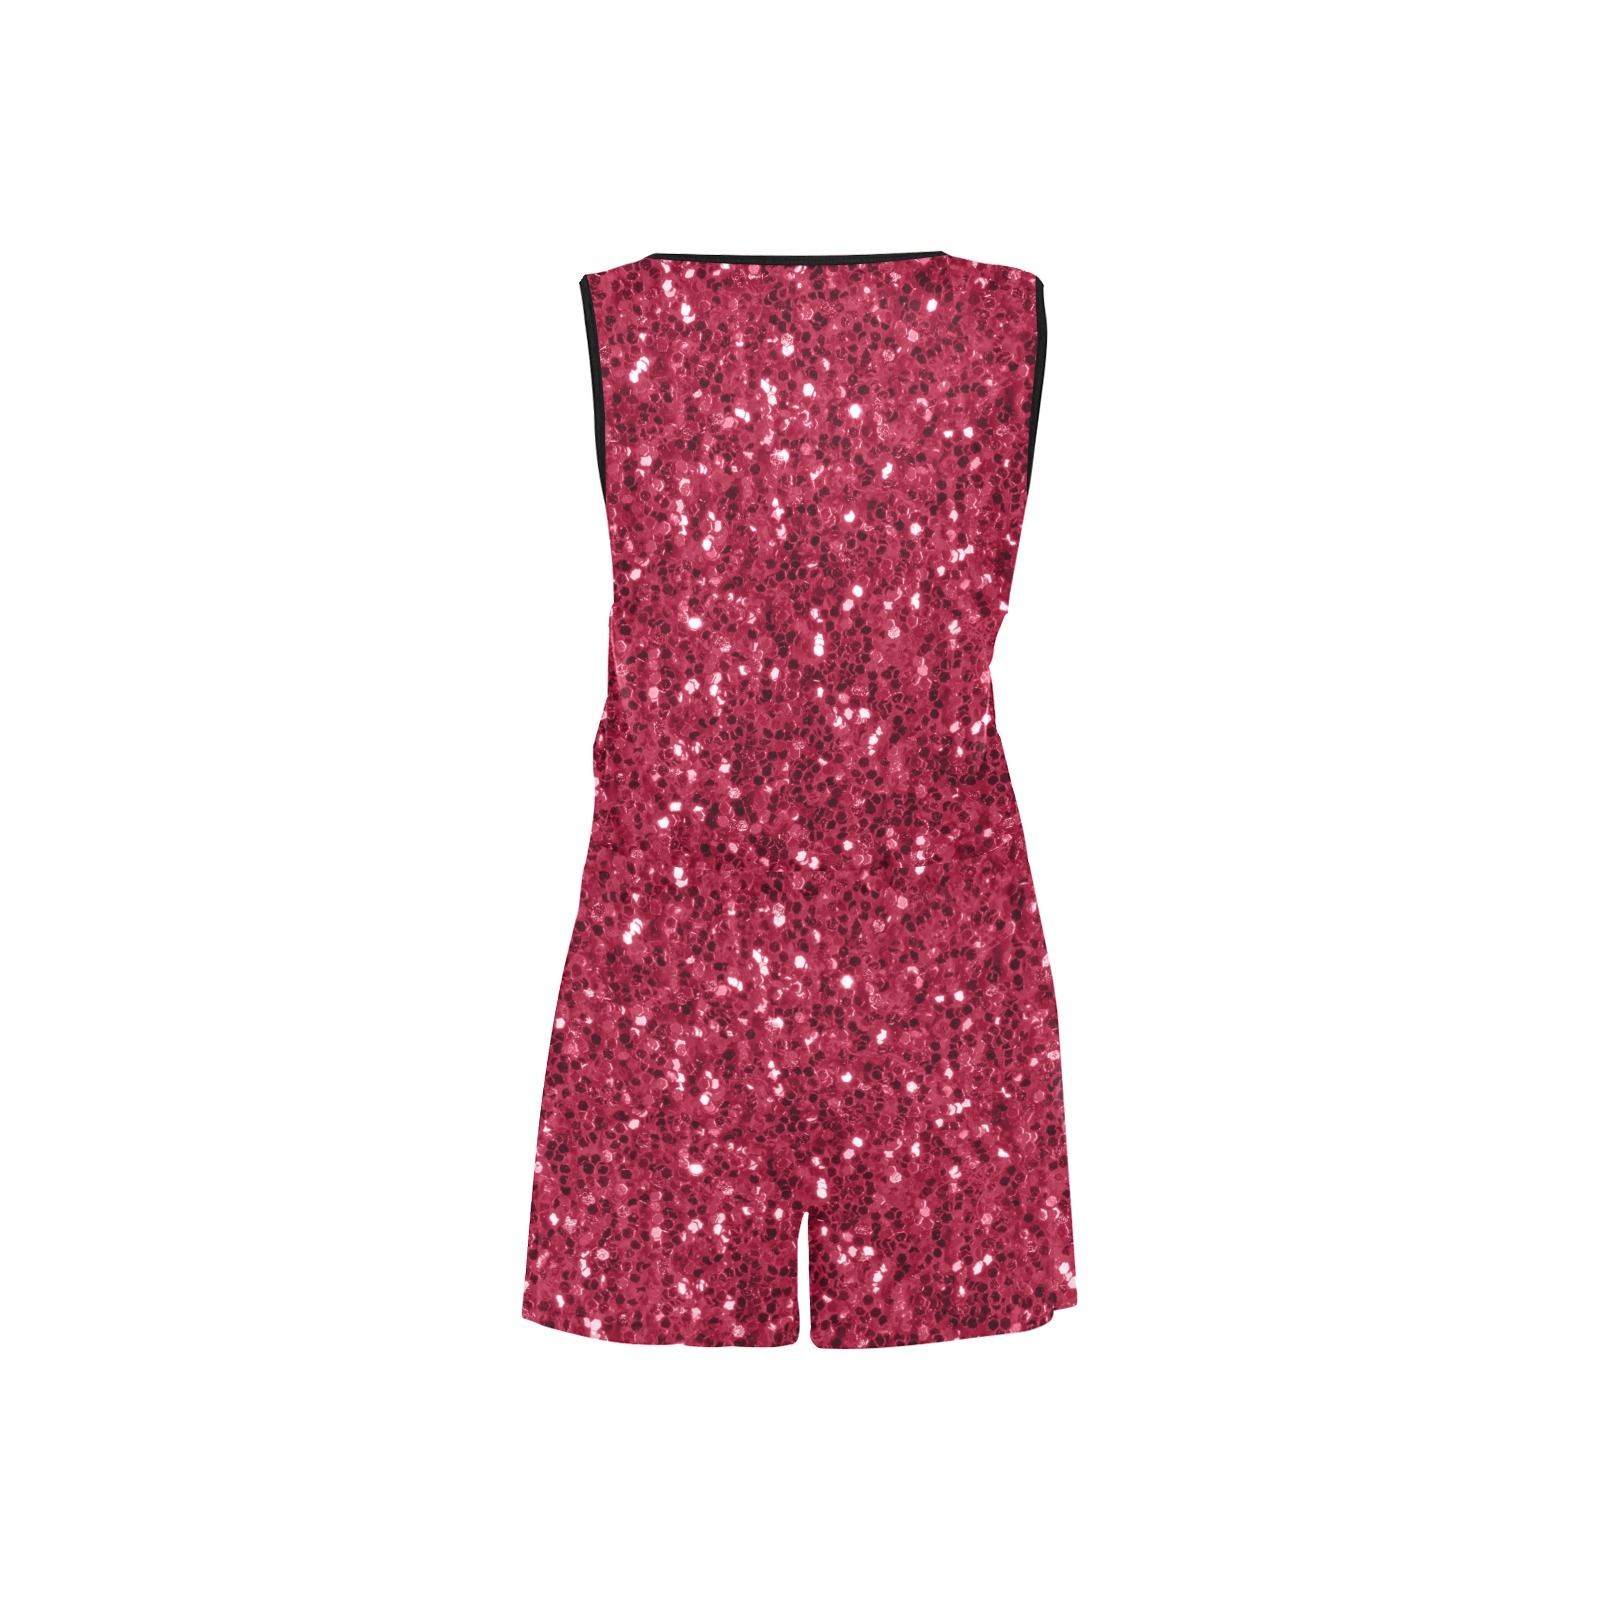 Magenta dark pink red faux sparkles glitter All Over Print Short Jumpsuit